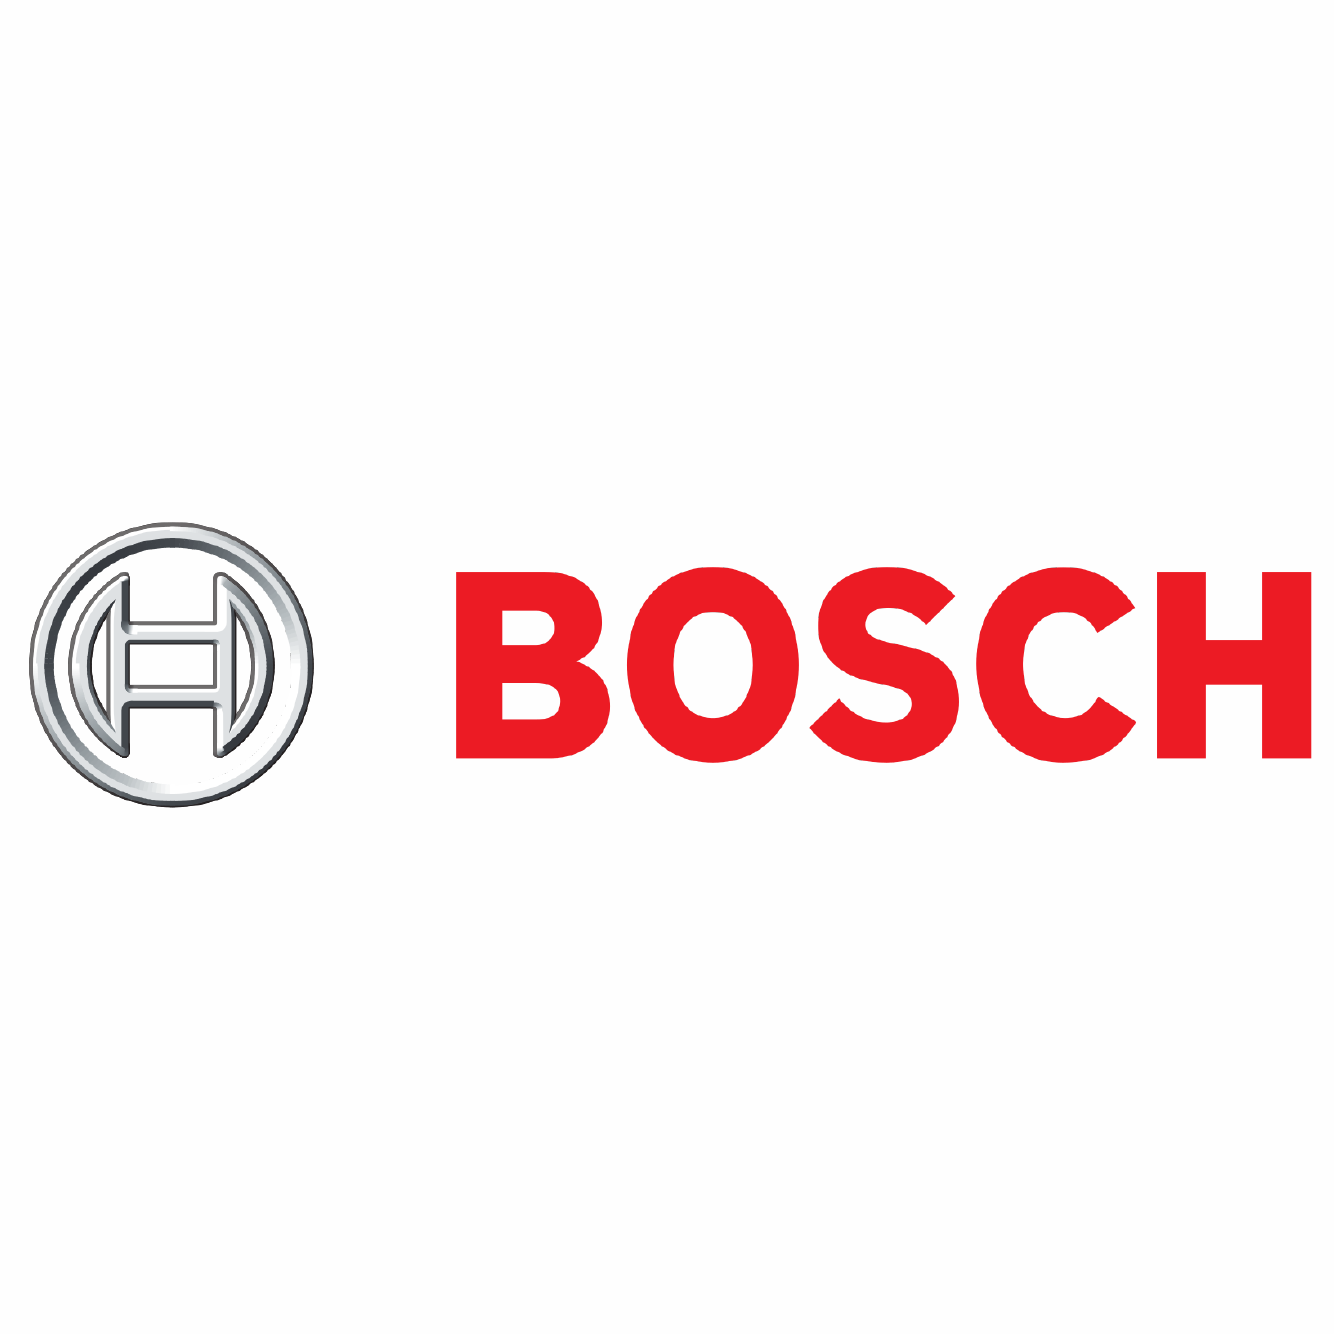 https://securetech.local/wp-content/uploads/2019/02/06.BOSCH_.png